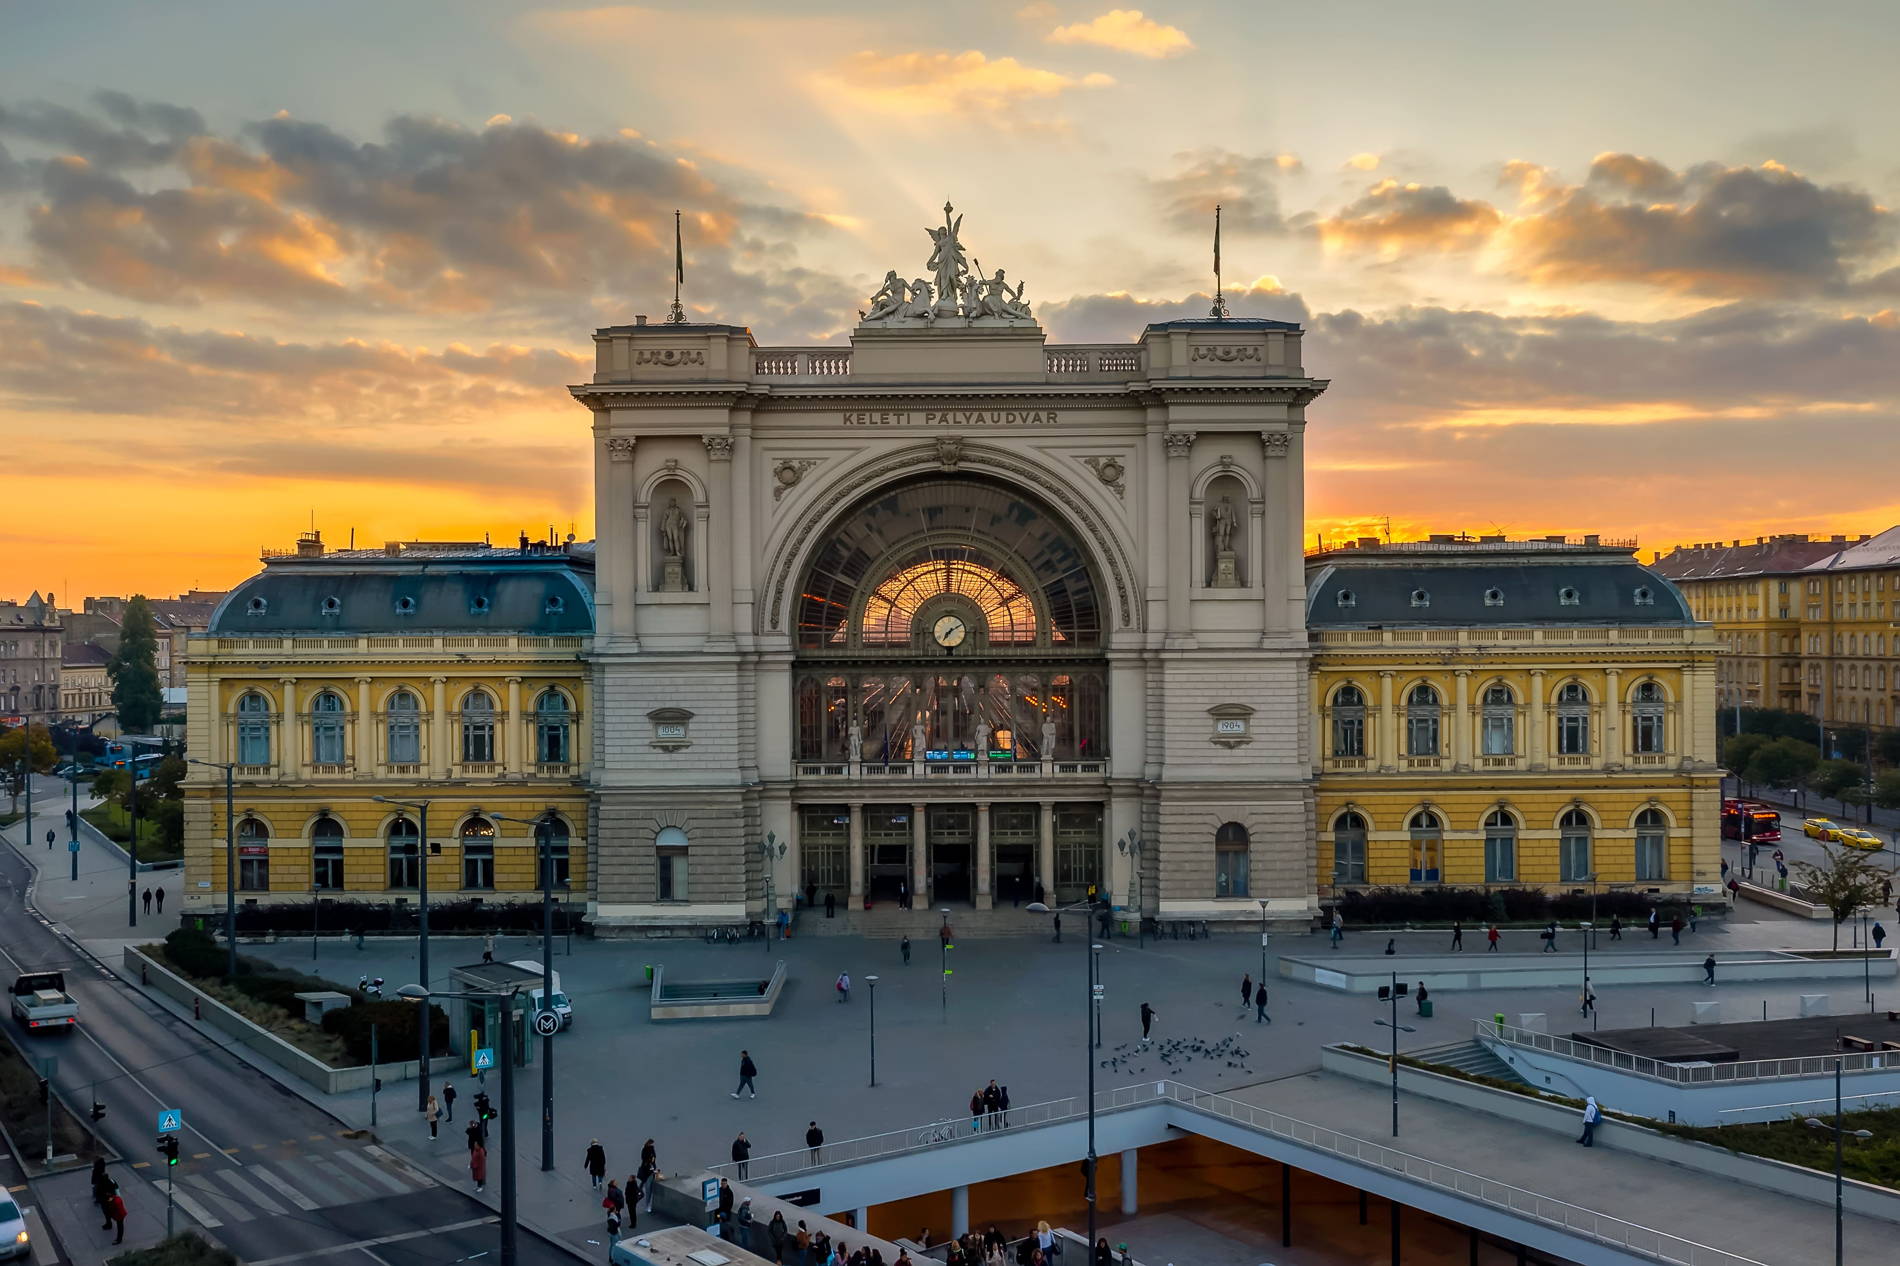 Budapest train station